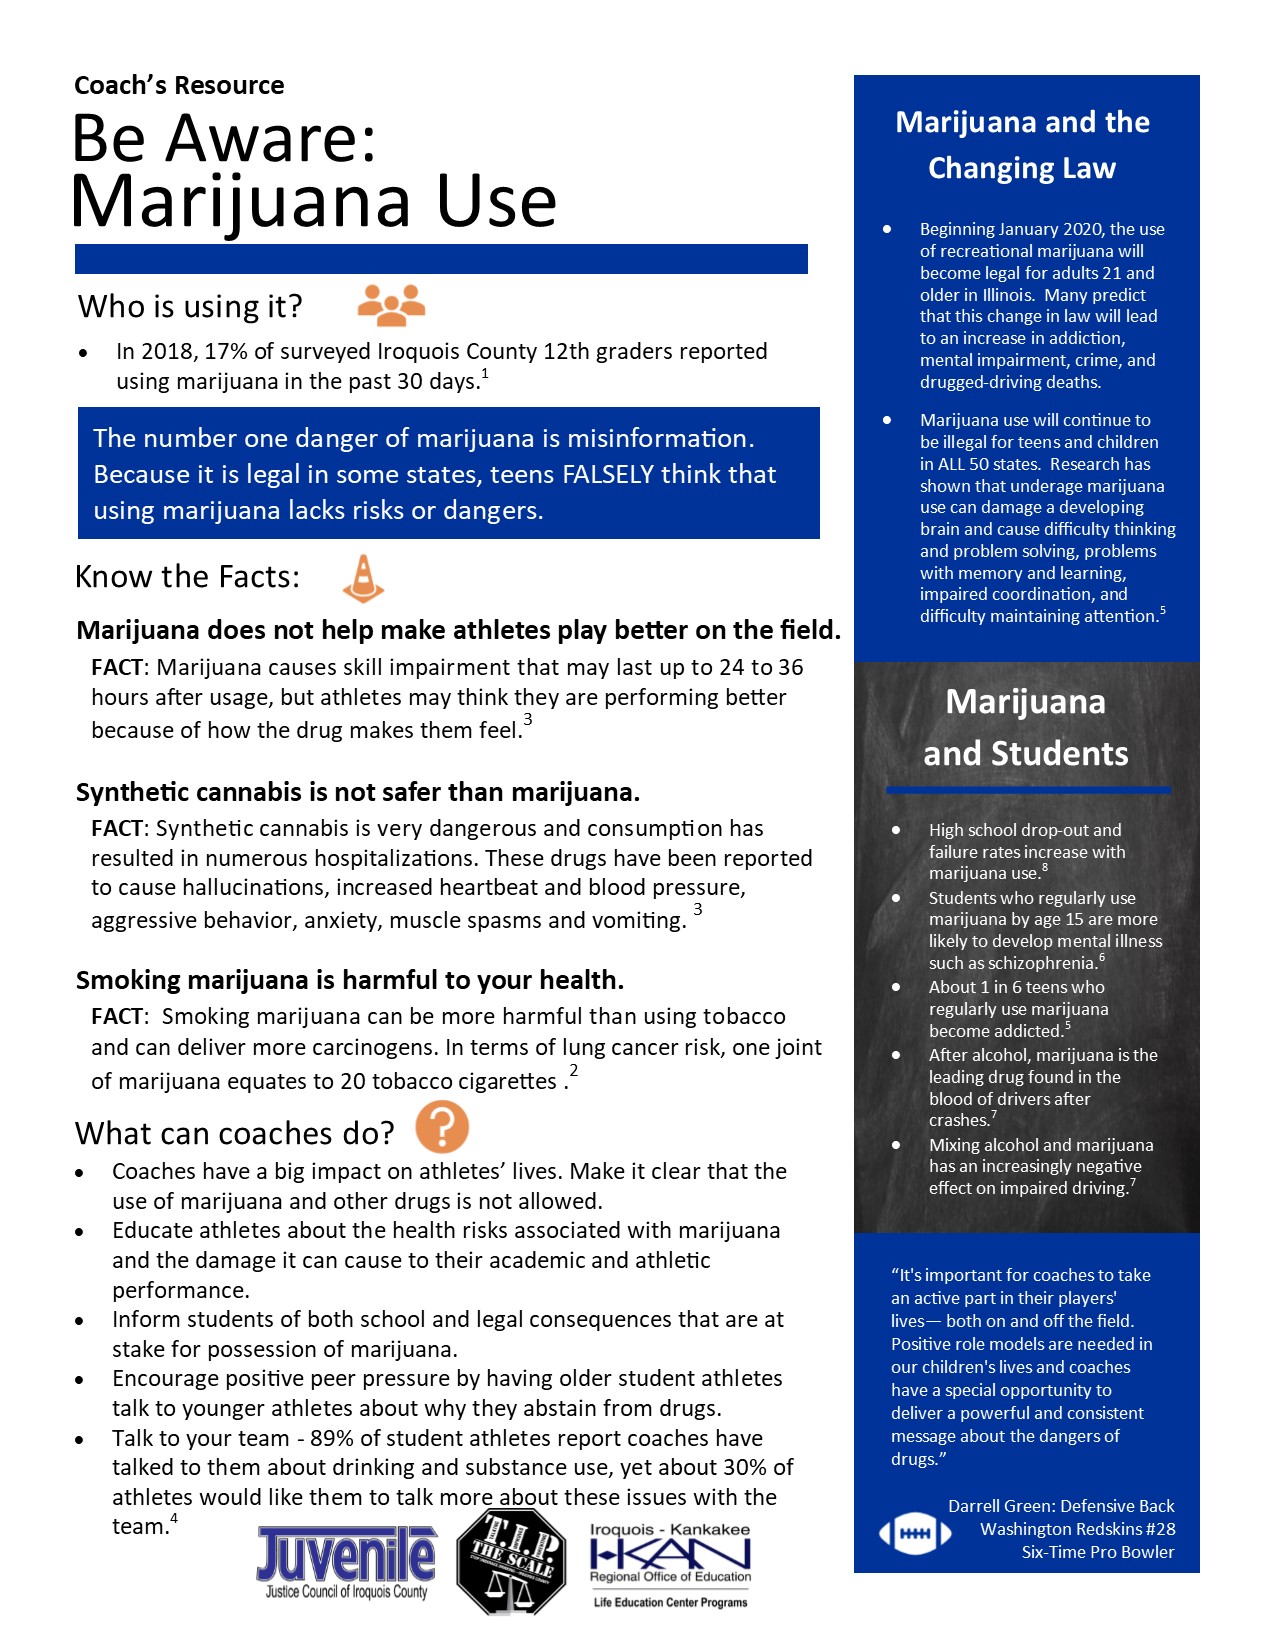 TIP 5 Coach's Resources edits Marijuana 10.15.19